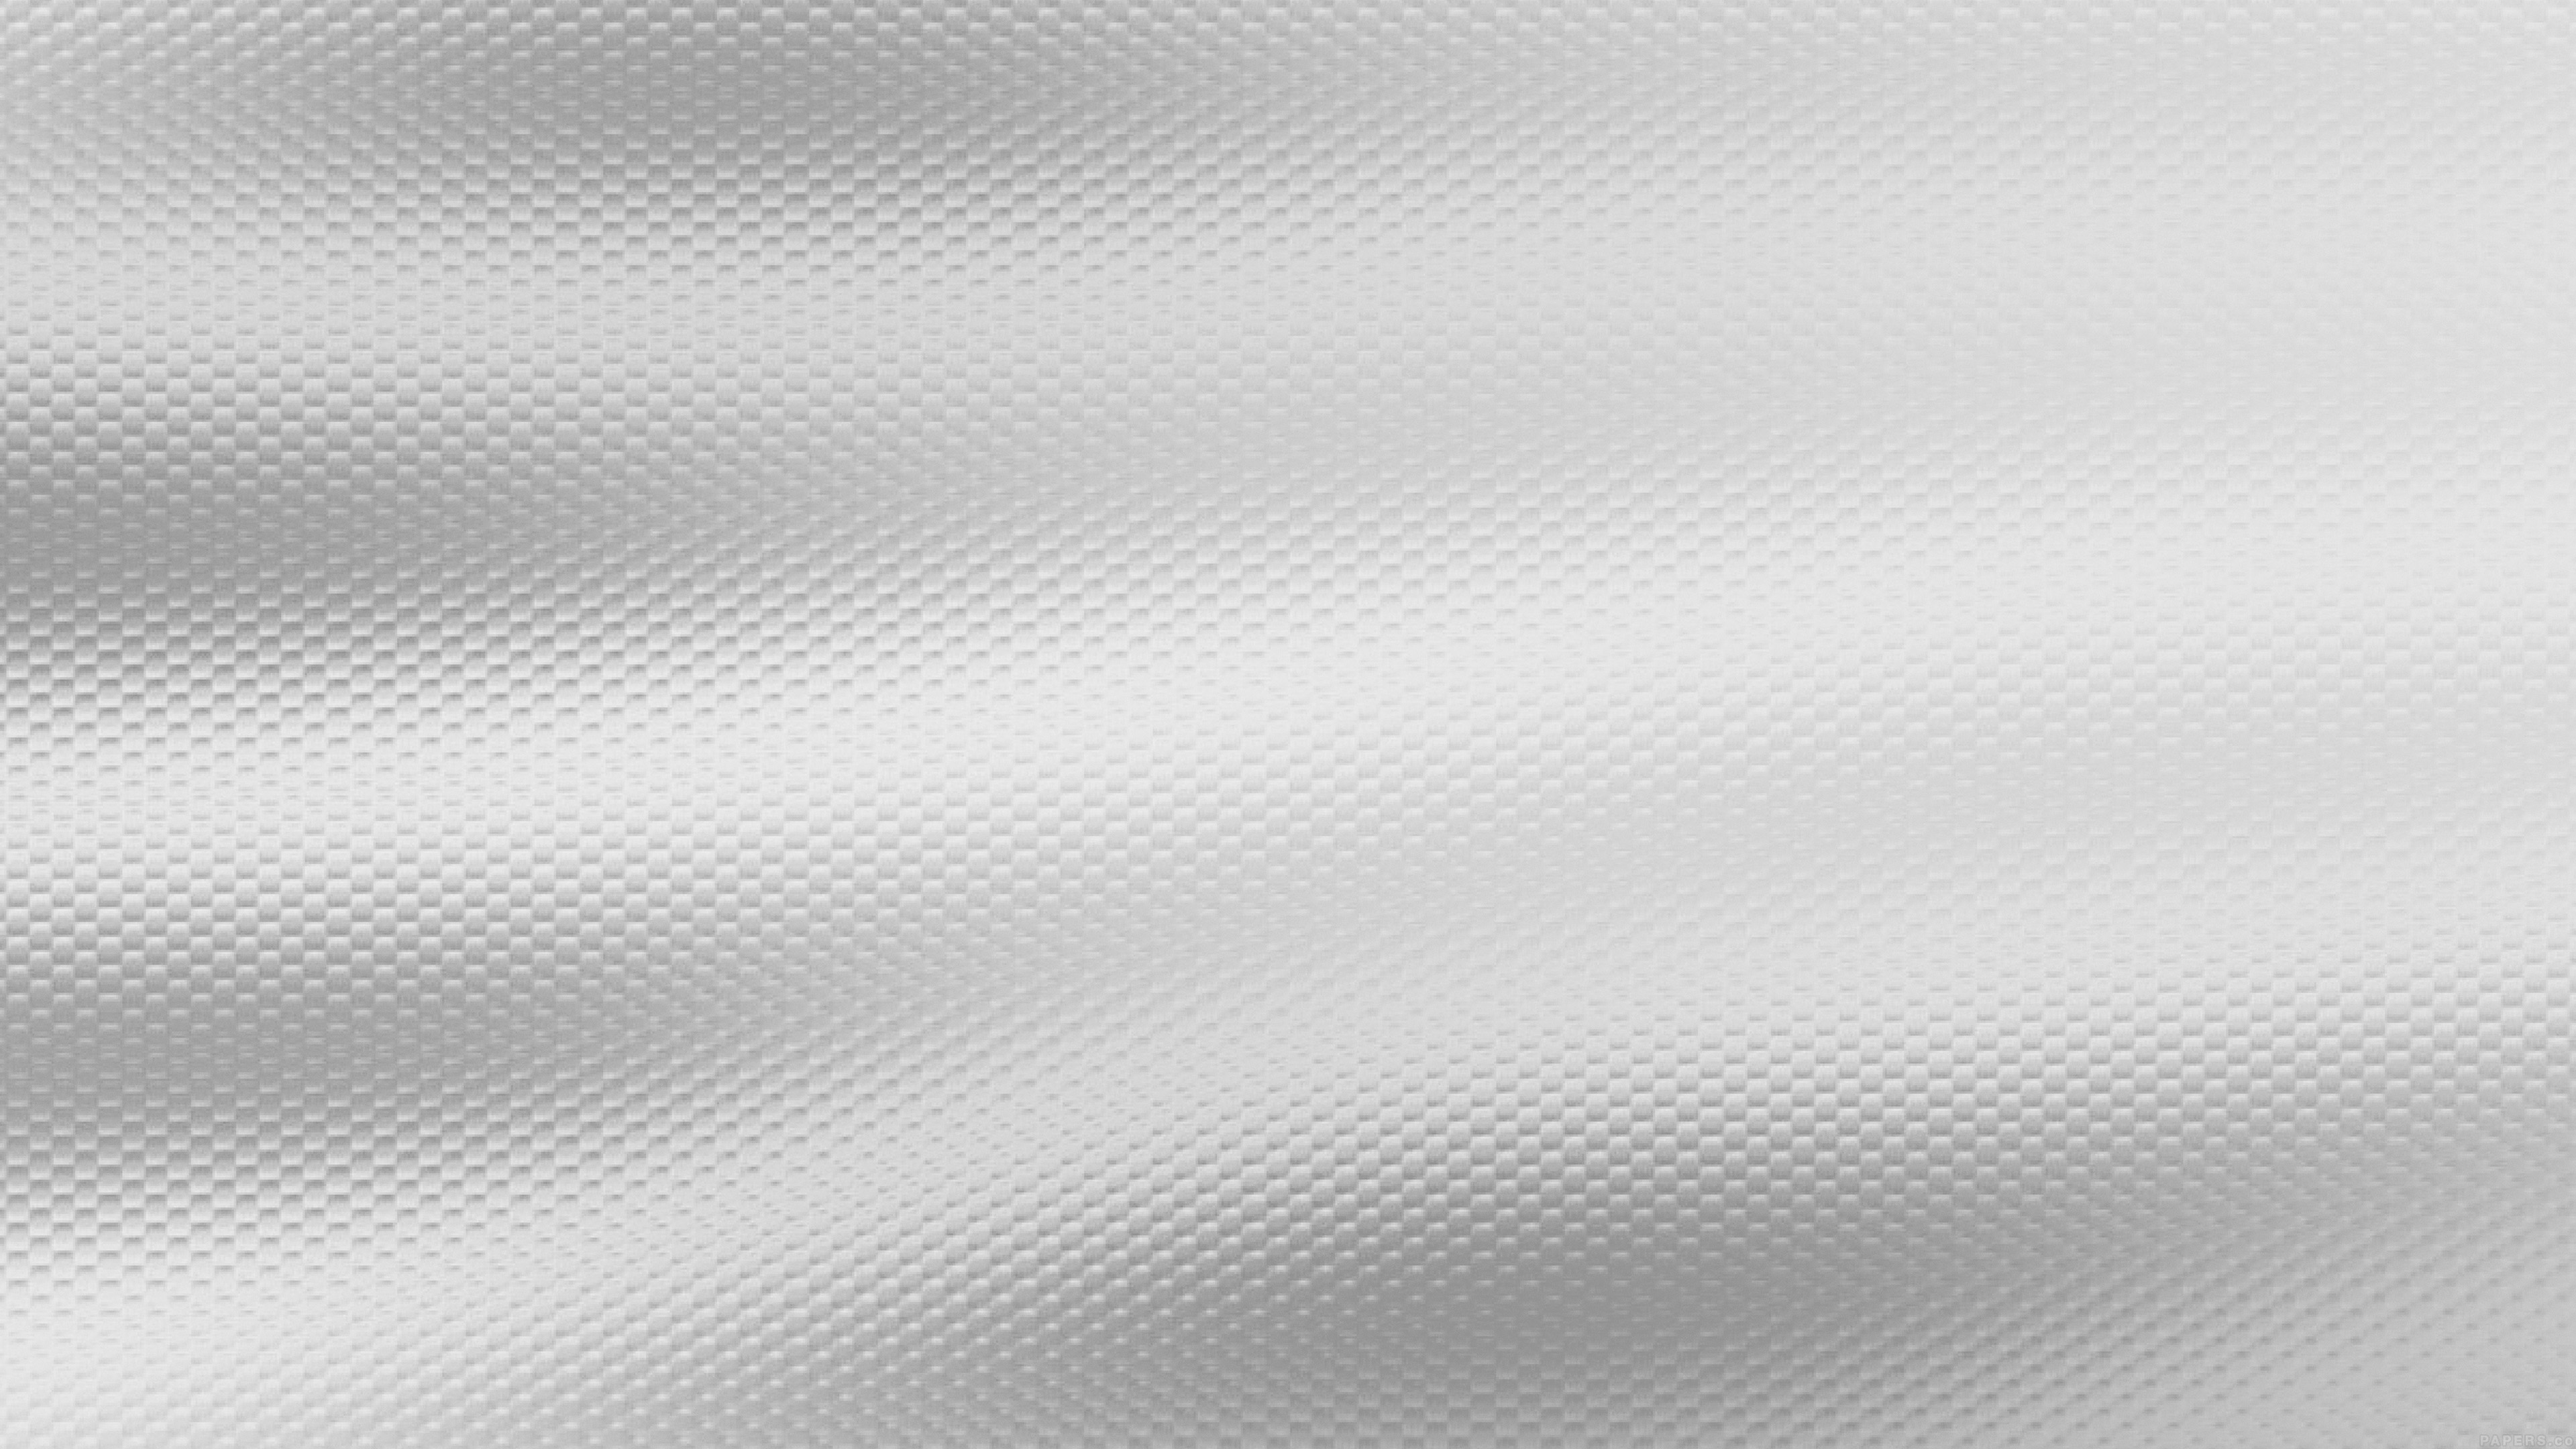 wallpaper for desktop, laptop. fabric texture white pattern